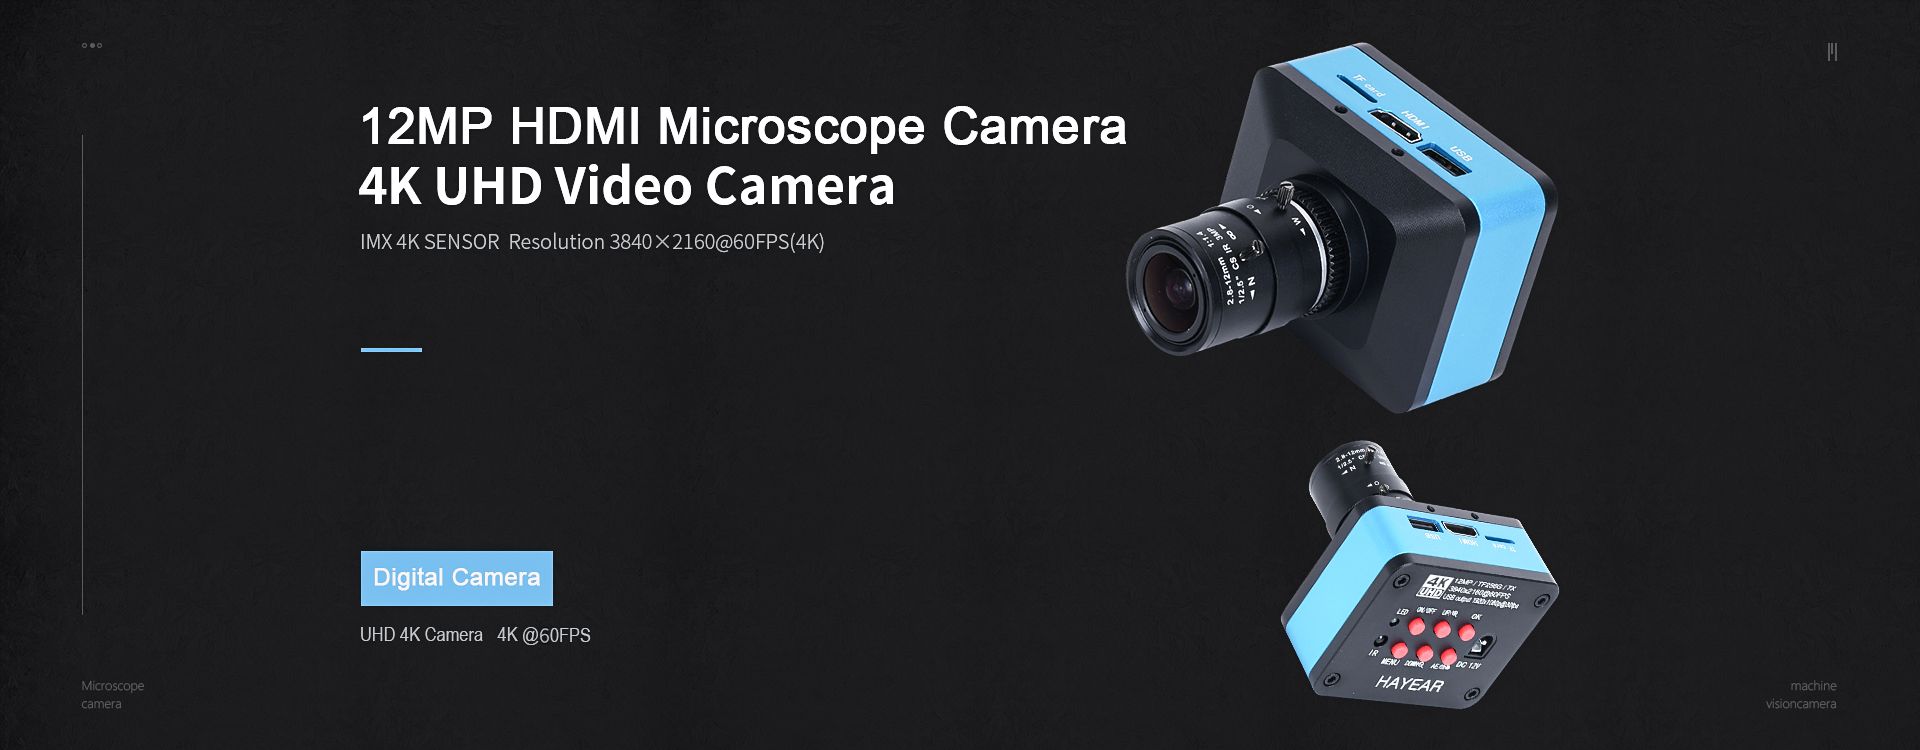 4K Digital Microscope Camera HY-5299